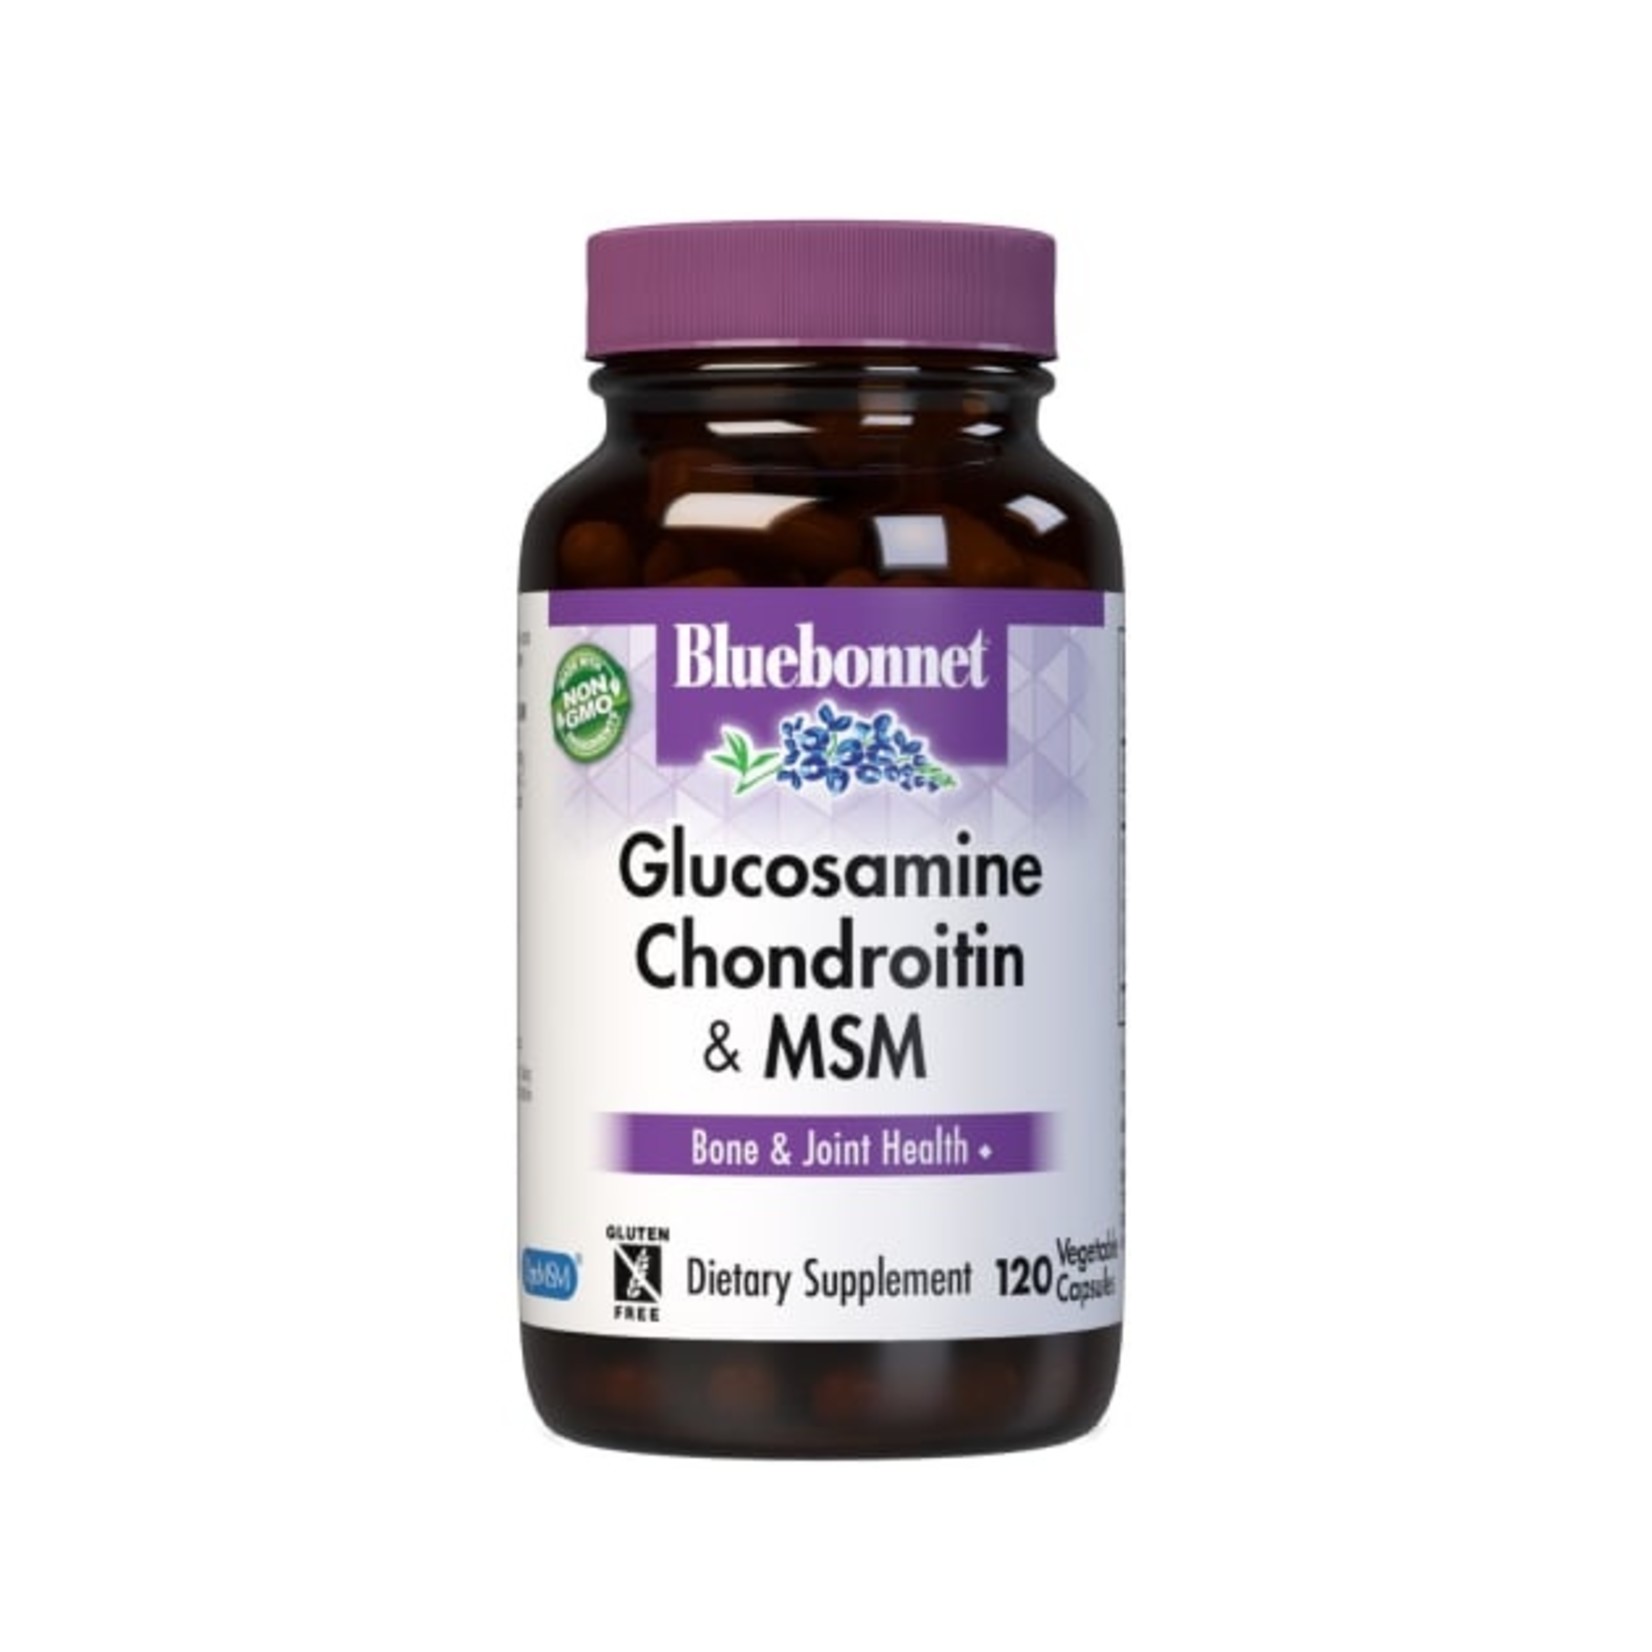 Bluebonnet Bluebonnet - Glucosamine Chondroitin MSM - 120 Capsules